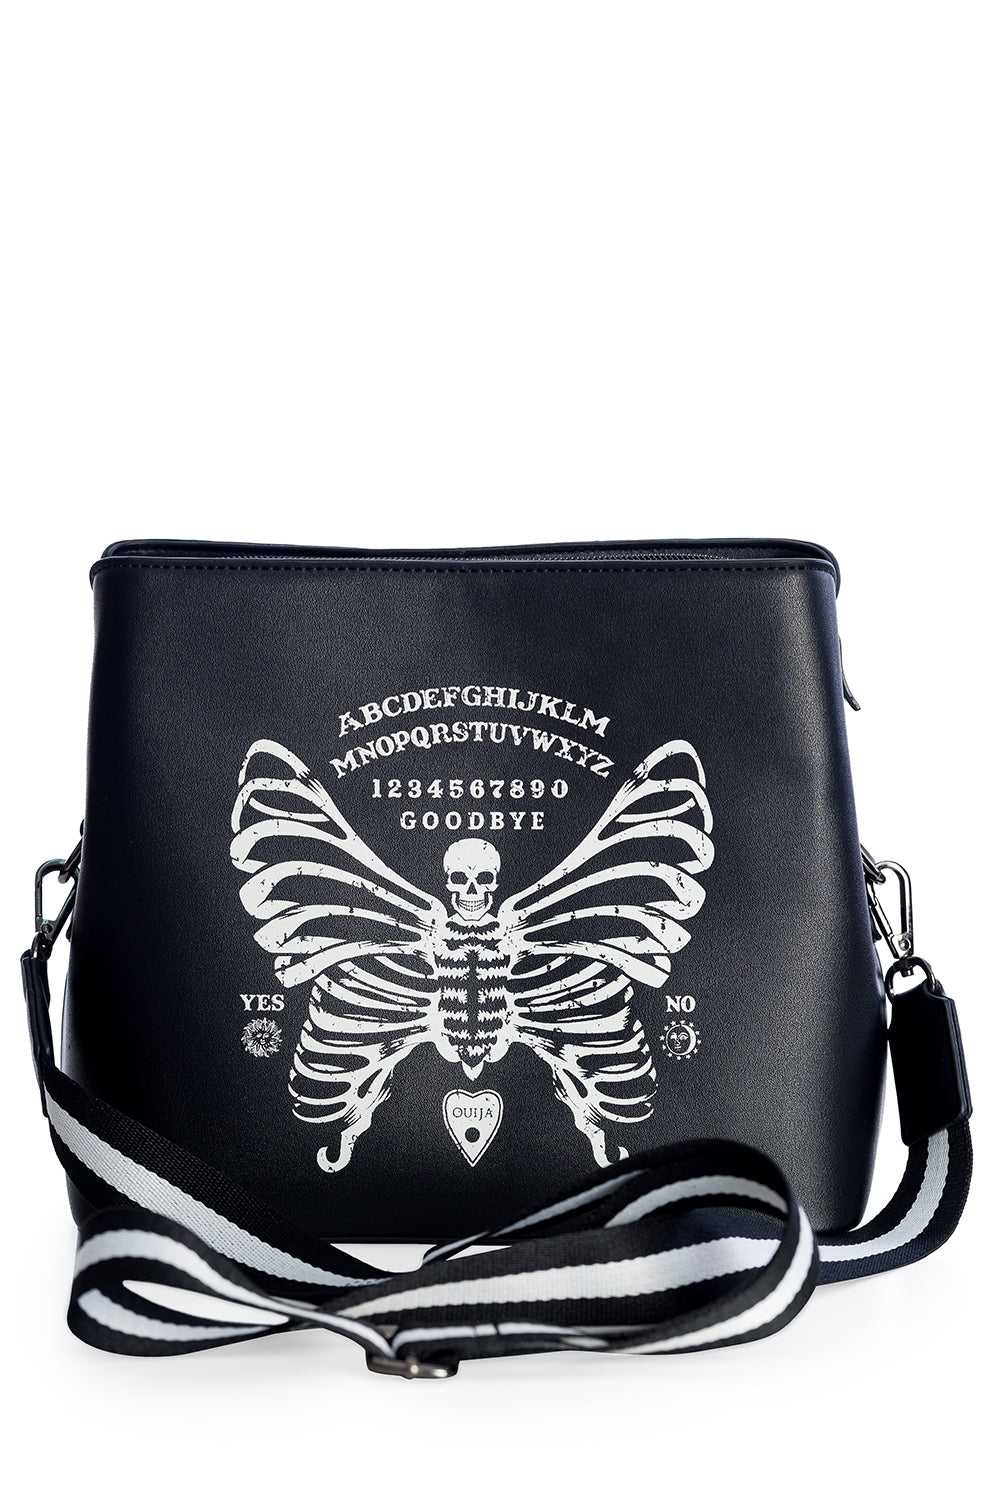 Buy Black Goth Crossbody Shoulder Bag Gothic Striped Bag Deaths Online in  India 